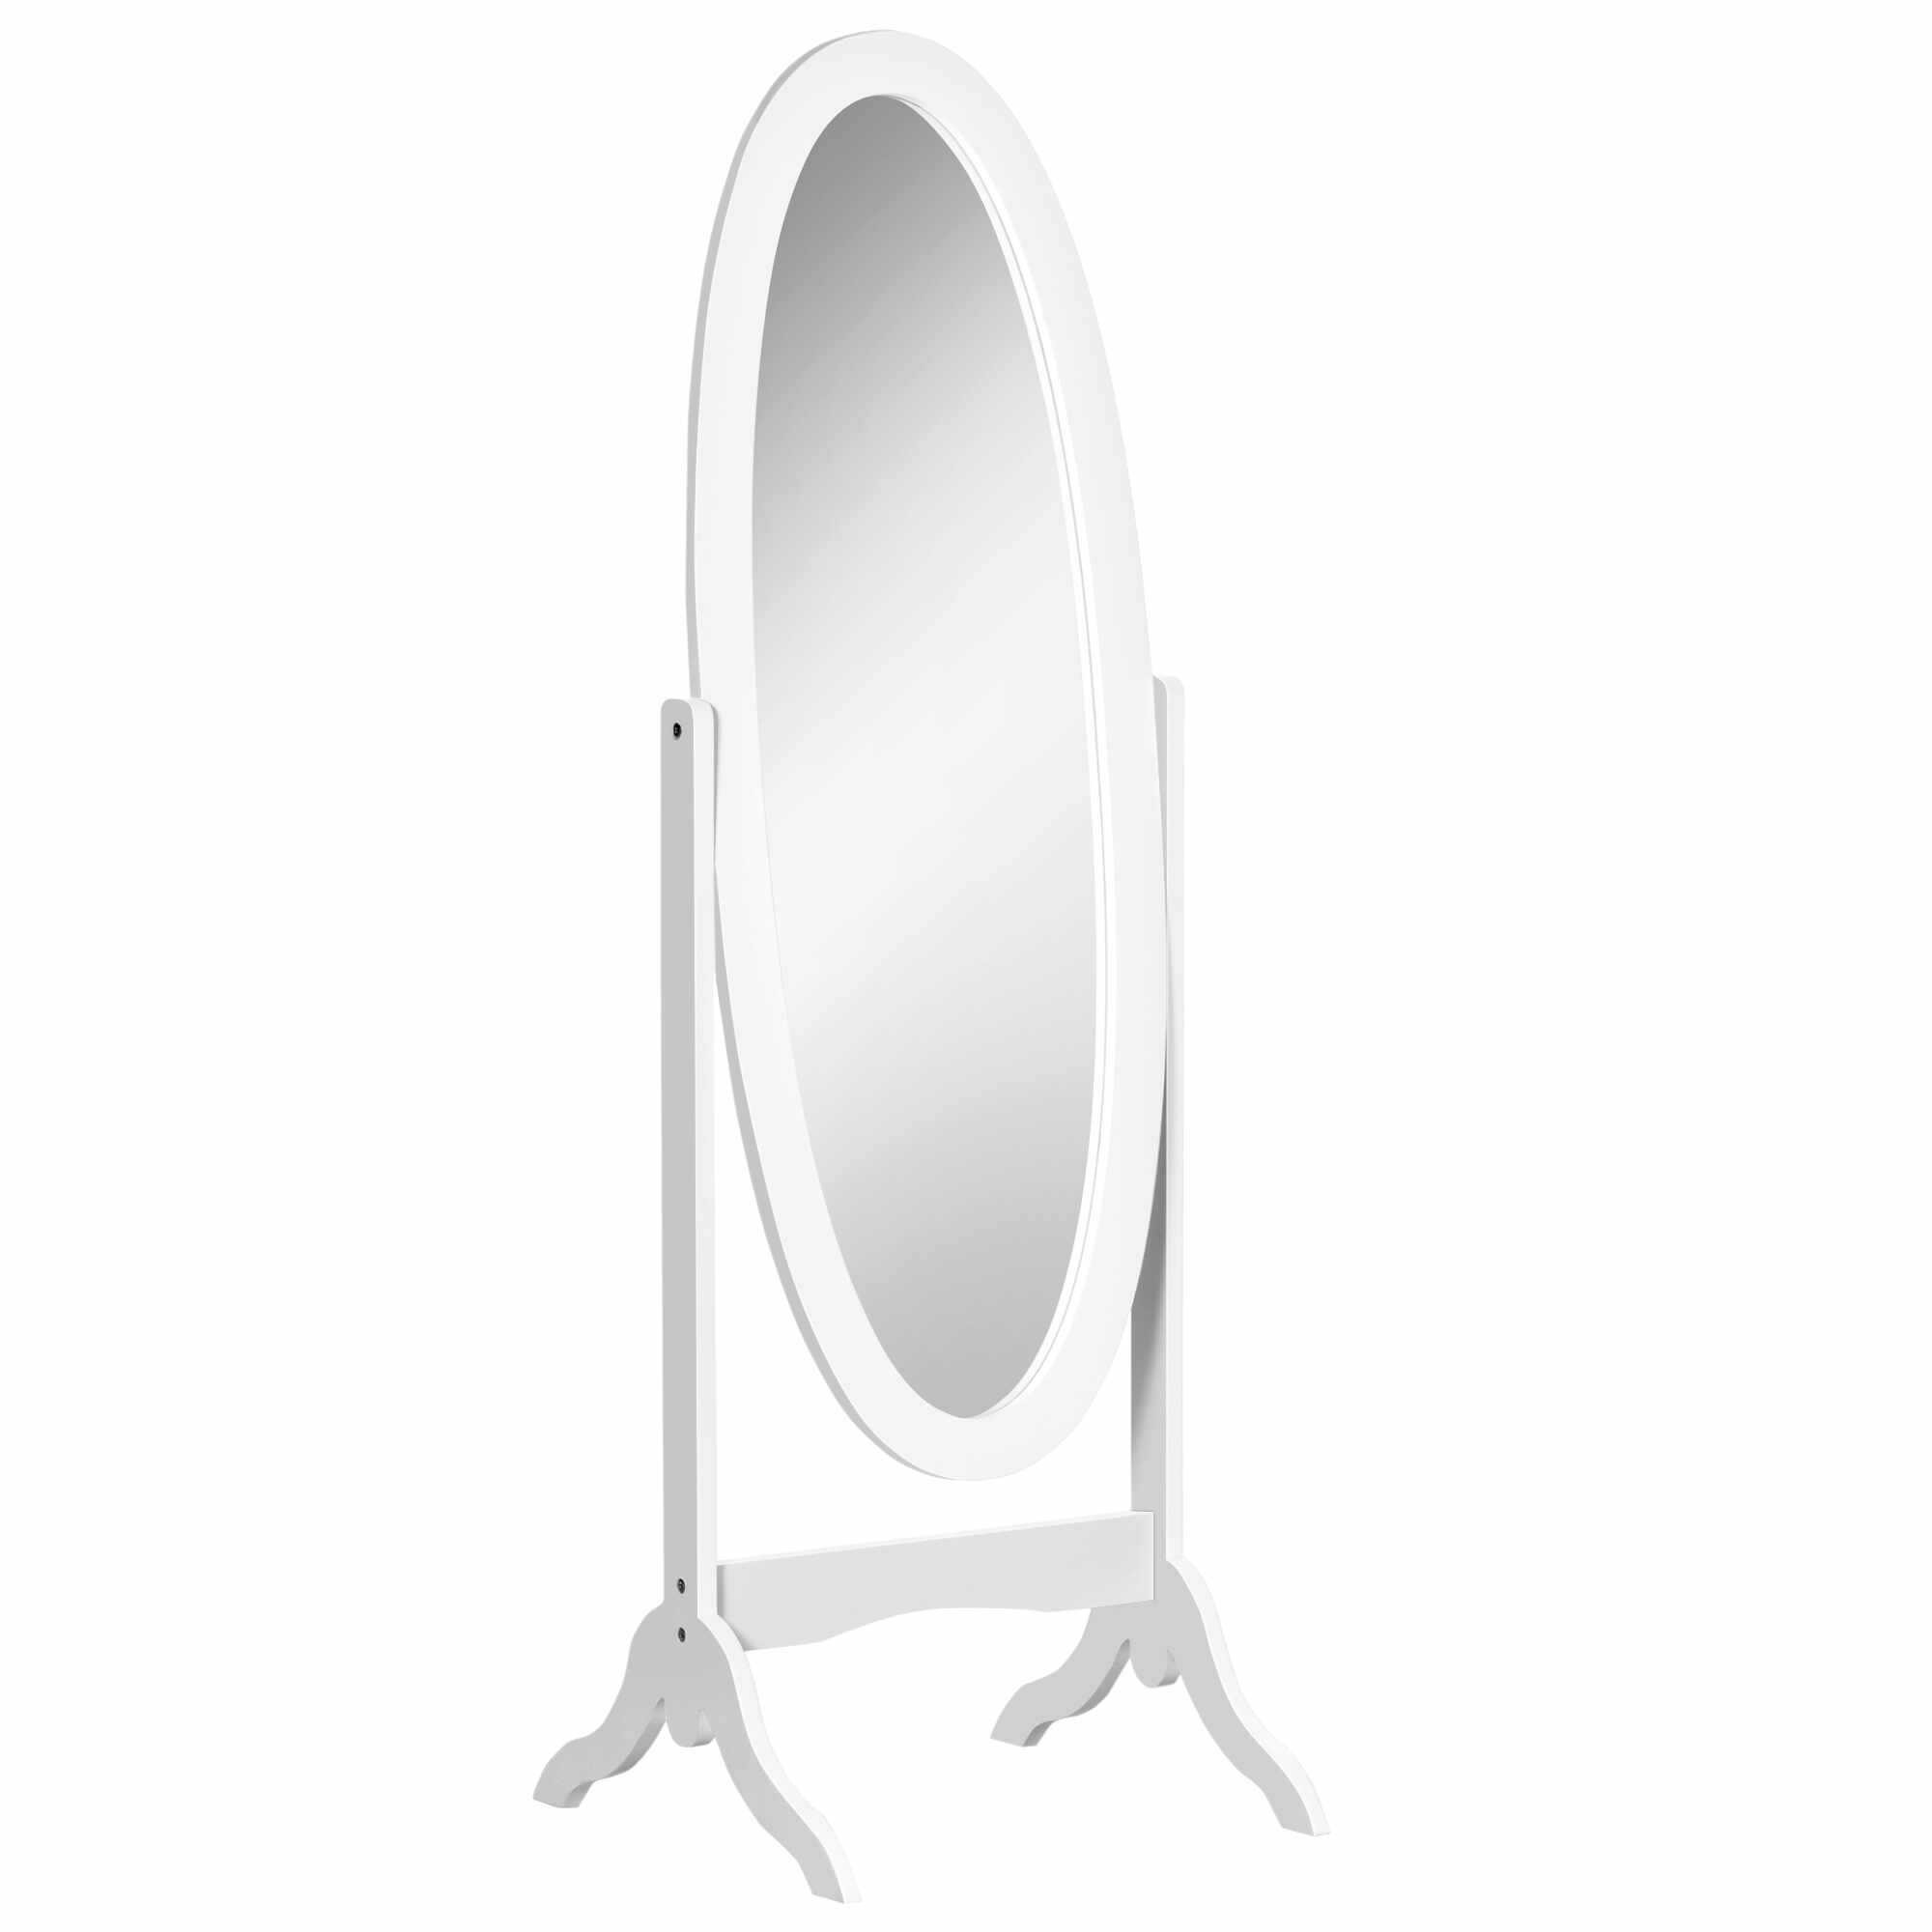 HomCom oglinda reglabila cu suport, 47.5x45.5x154.5cm, alba | Aosom Ro